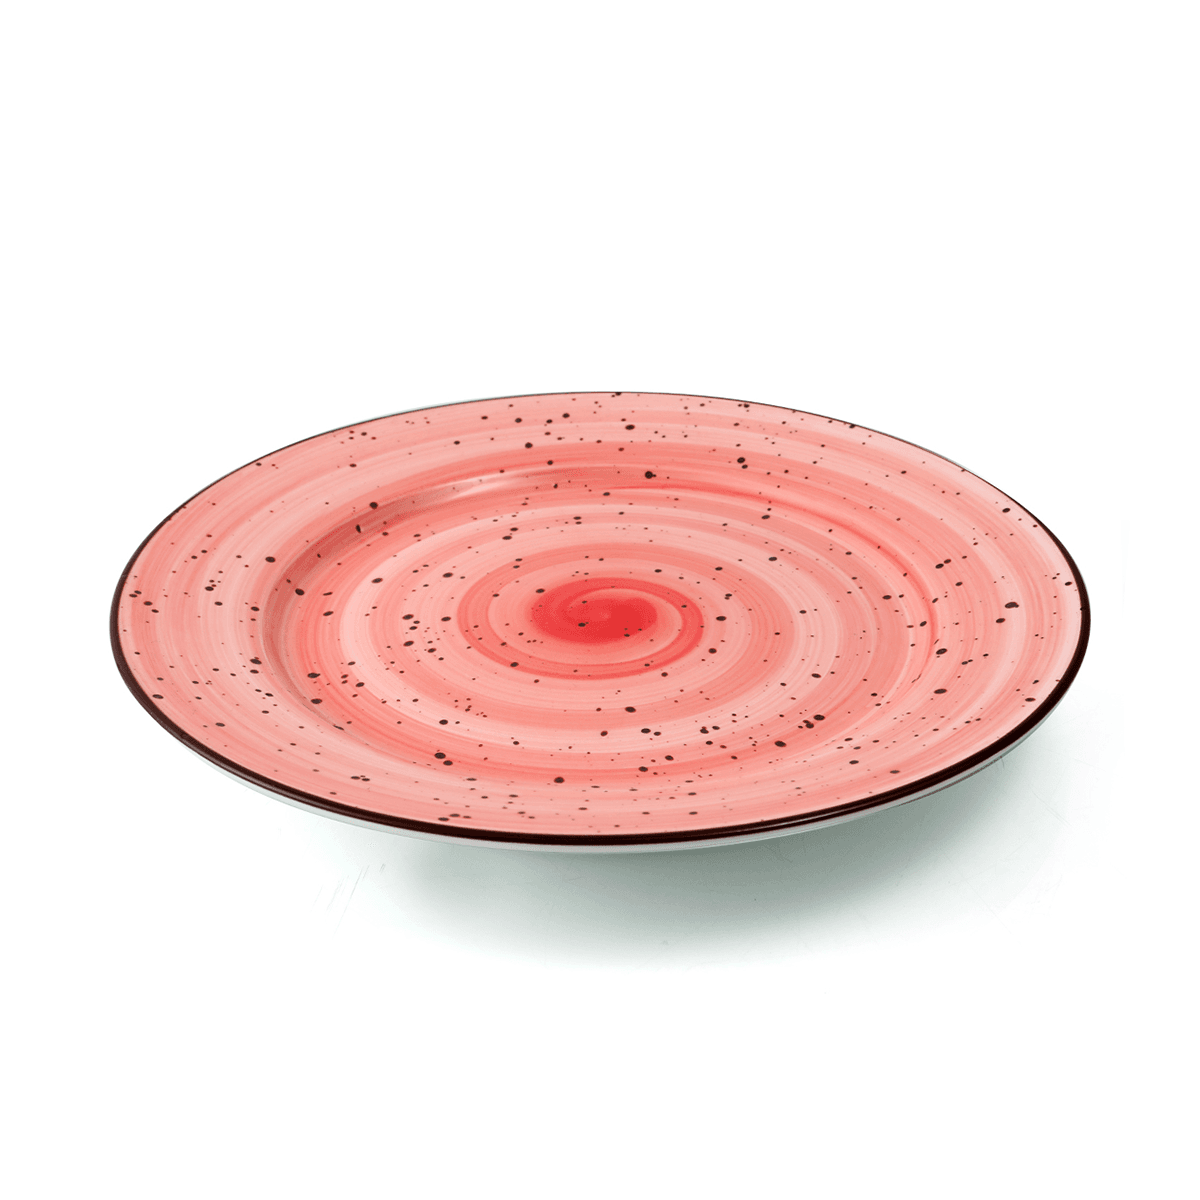 صحن تقديم مسطح بورسلان 12 بوصة أحمر بورسليتا Porceletta Glazed Porcelain Flat Plate